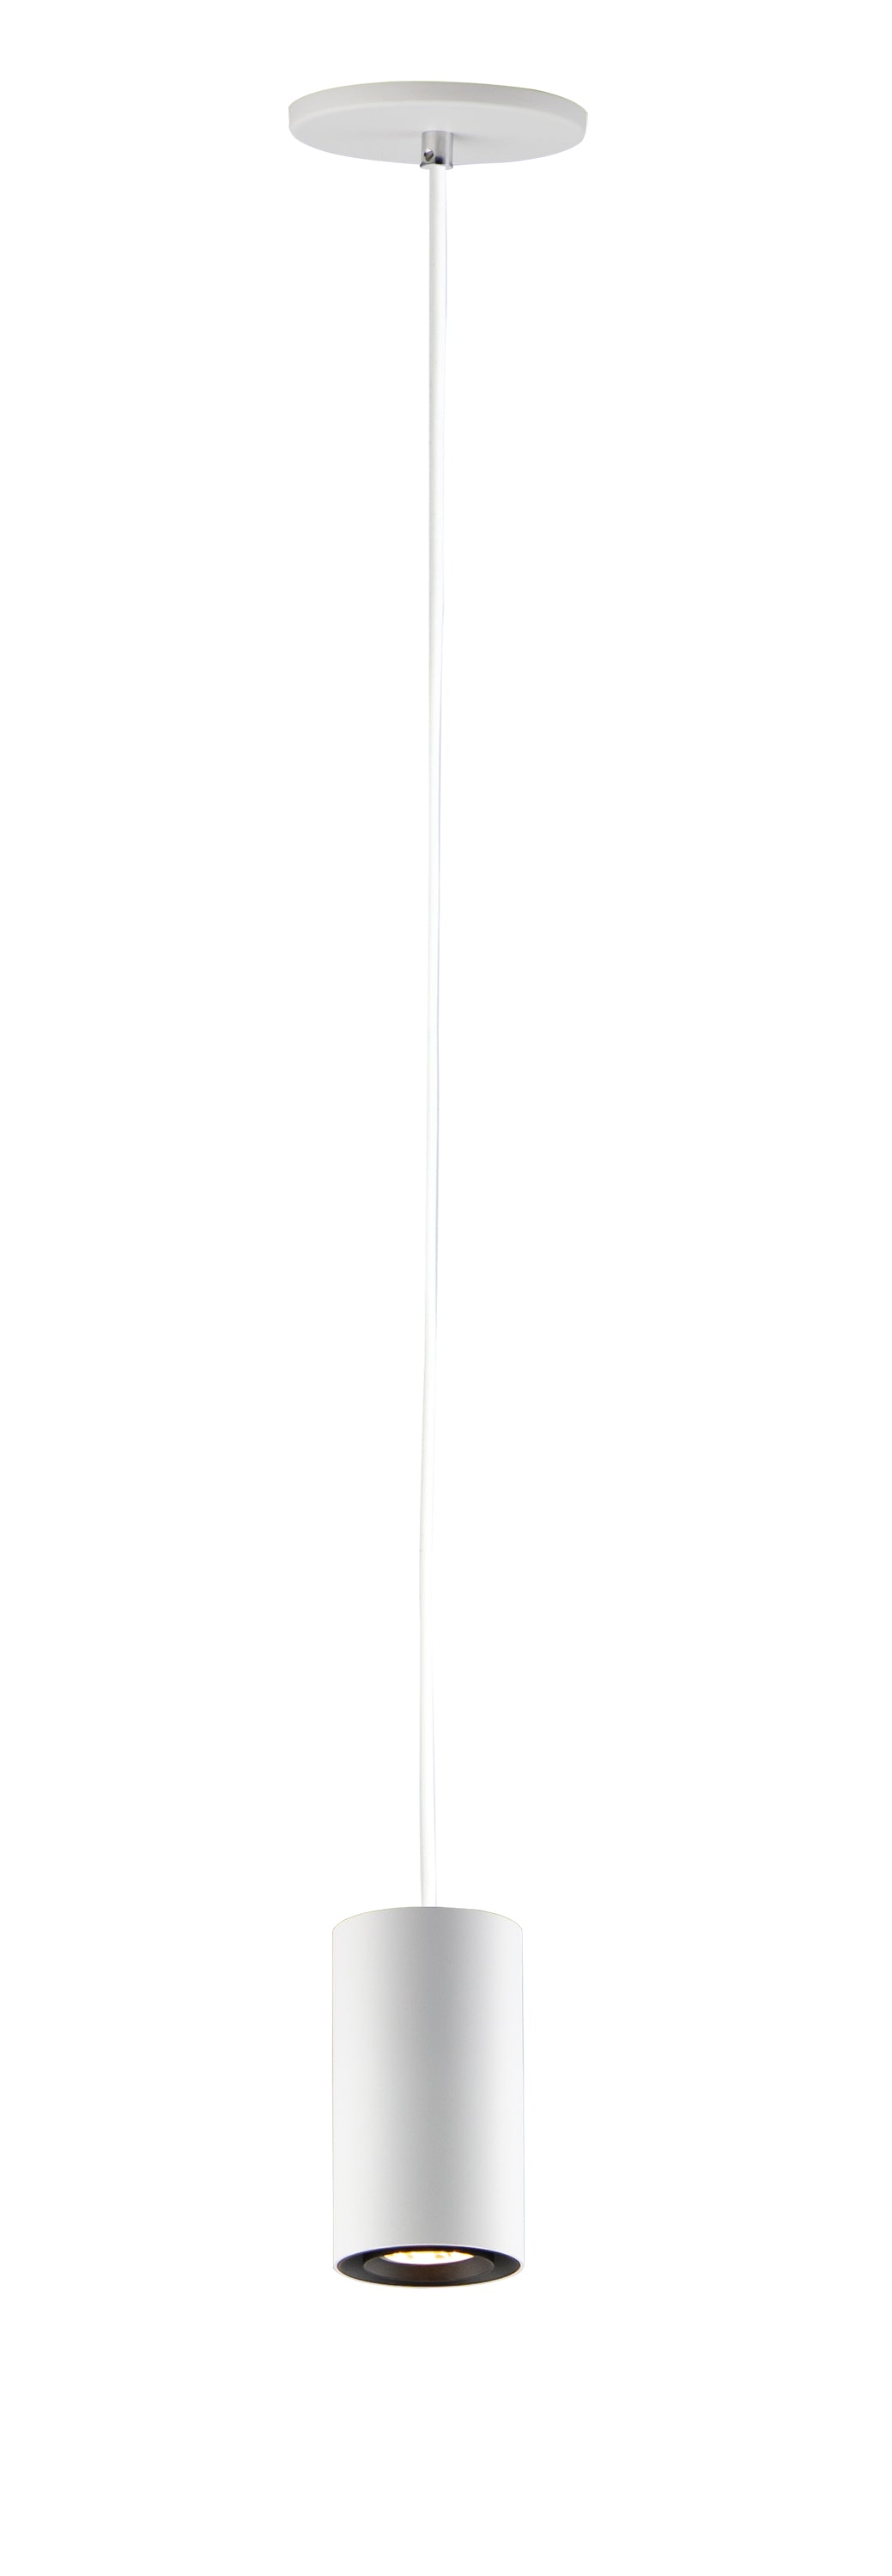 Dwell-Single Pendant Pendant ET2 3.5x3.5x6.25 White 